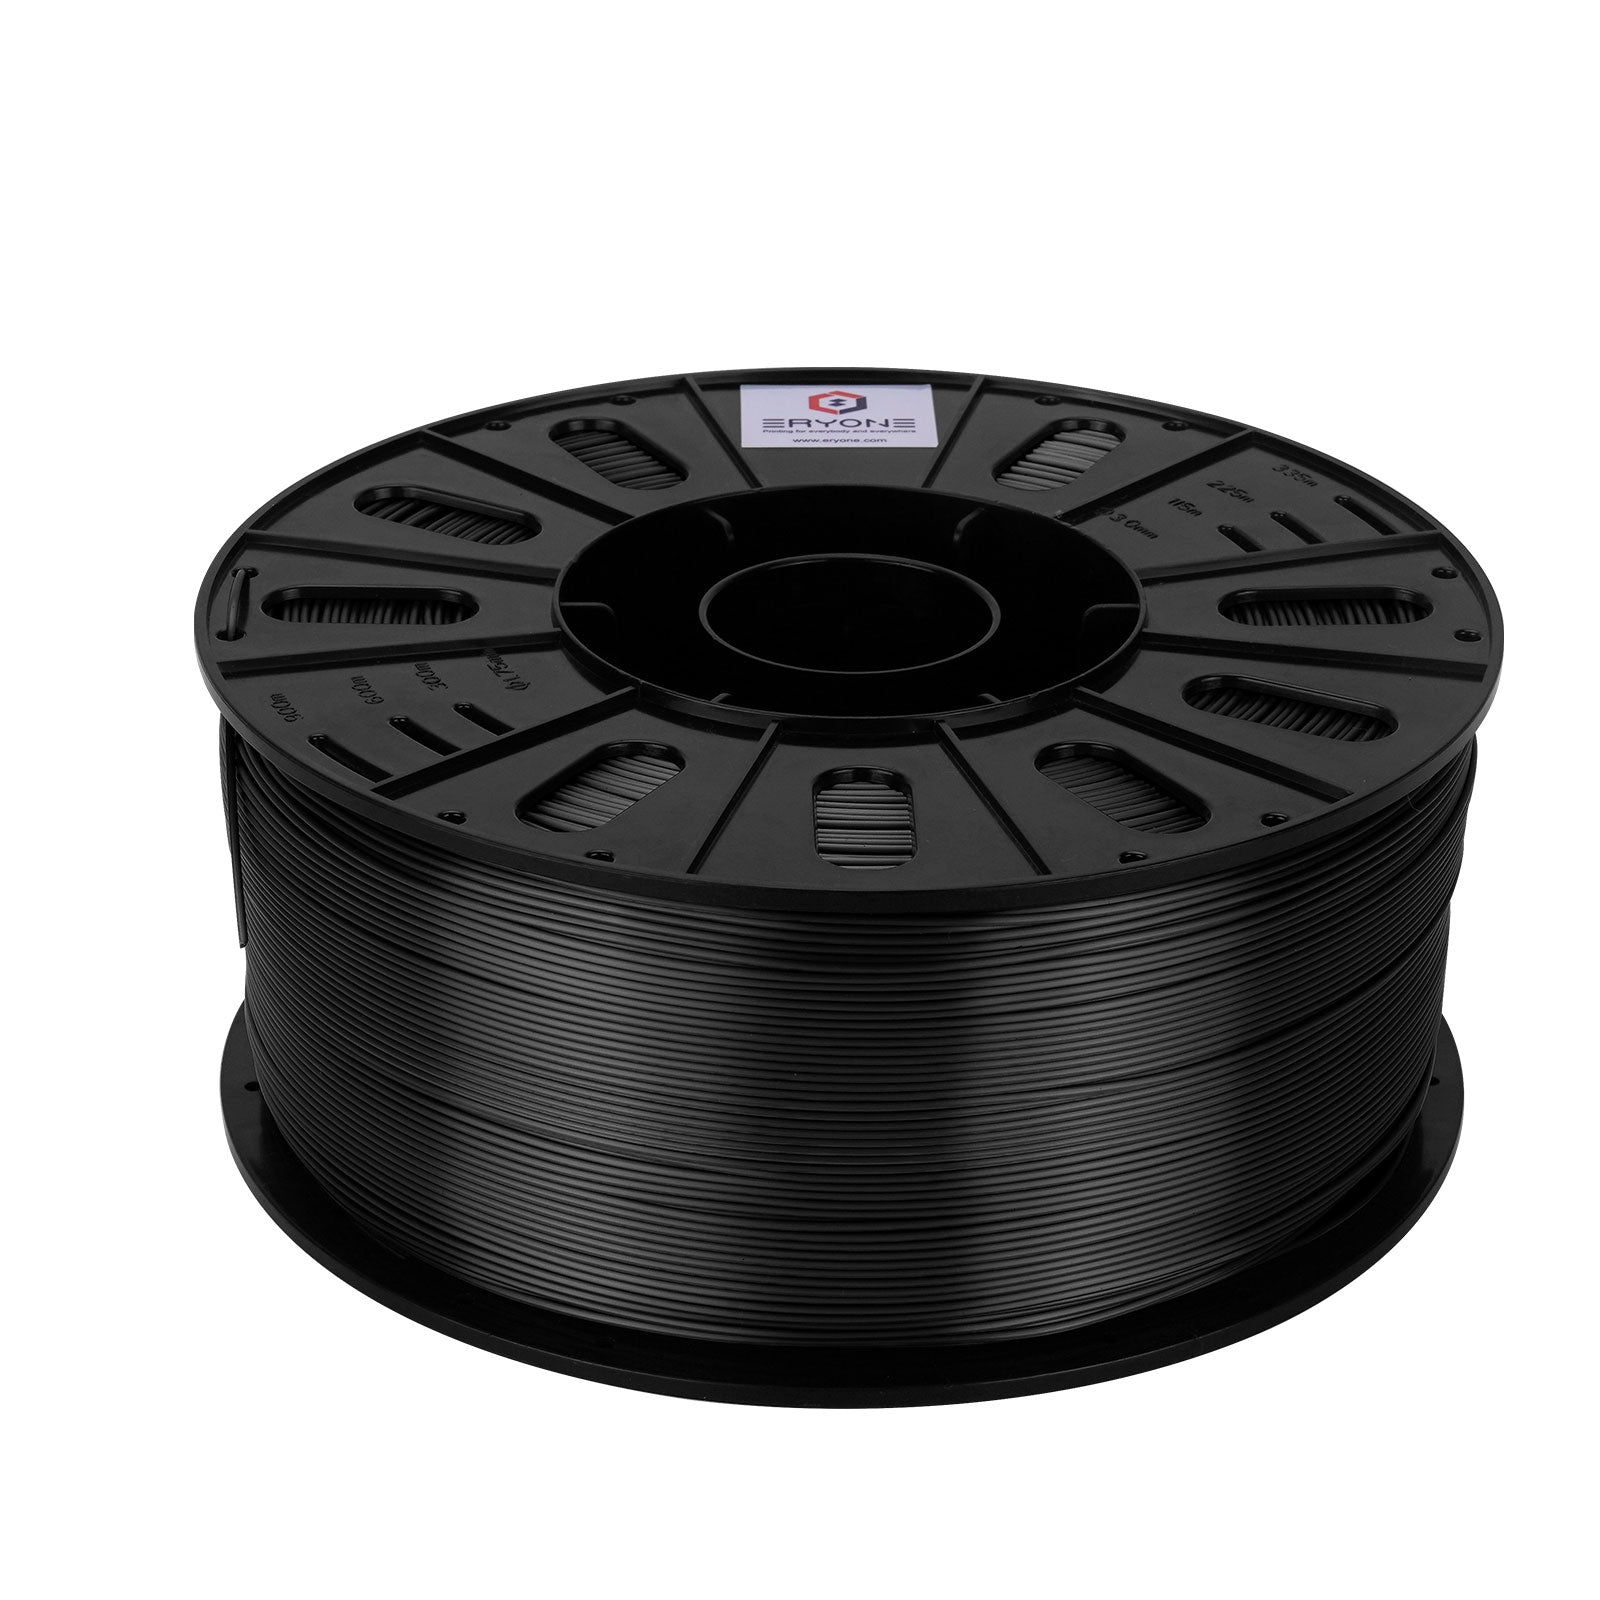 ERYONE PLA 3D Printer Filament 1.75mm, Dimensional Accuracy +/- 0.05 mm 3kg (6.6LBS)/Spool